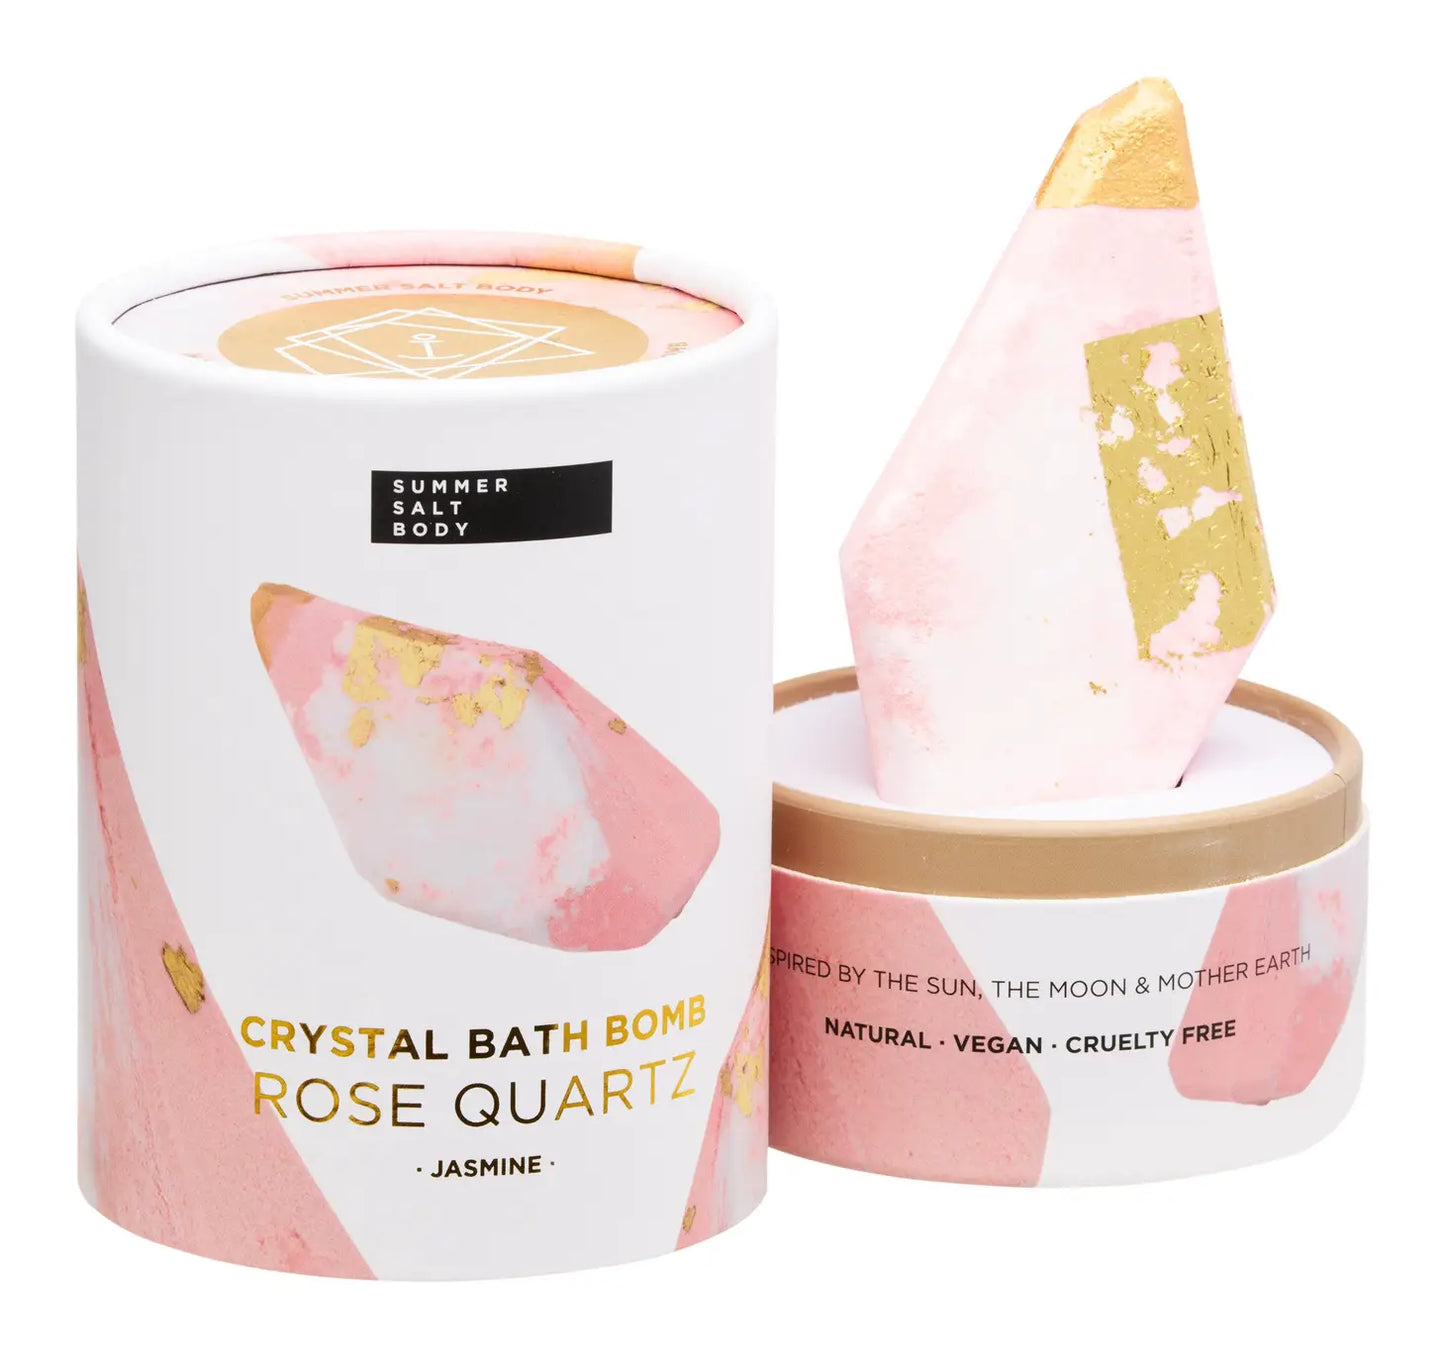 Crystal Bath Bomb - Rose Quartz - Jasmine